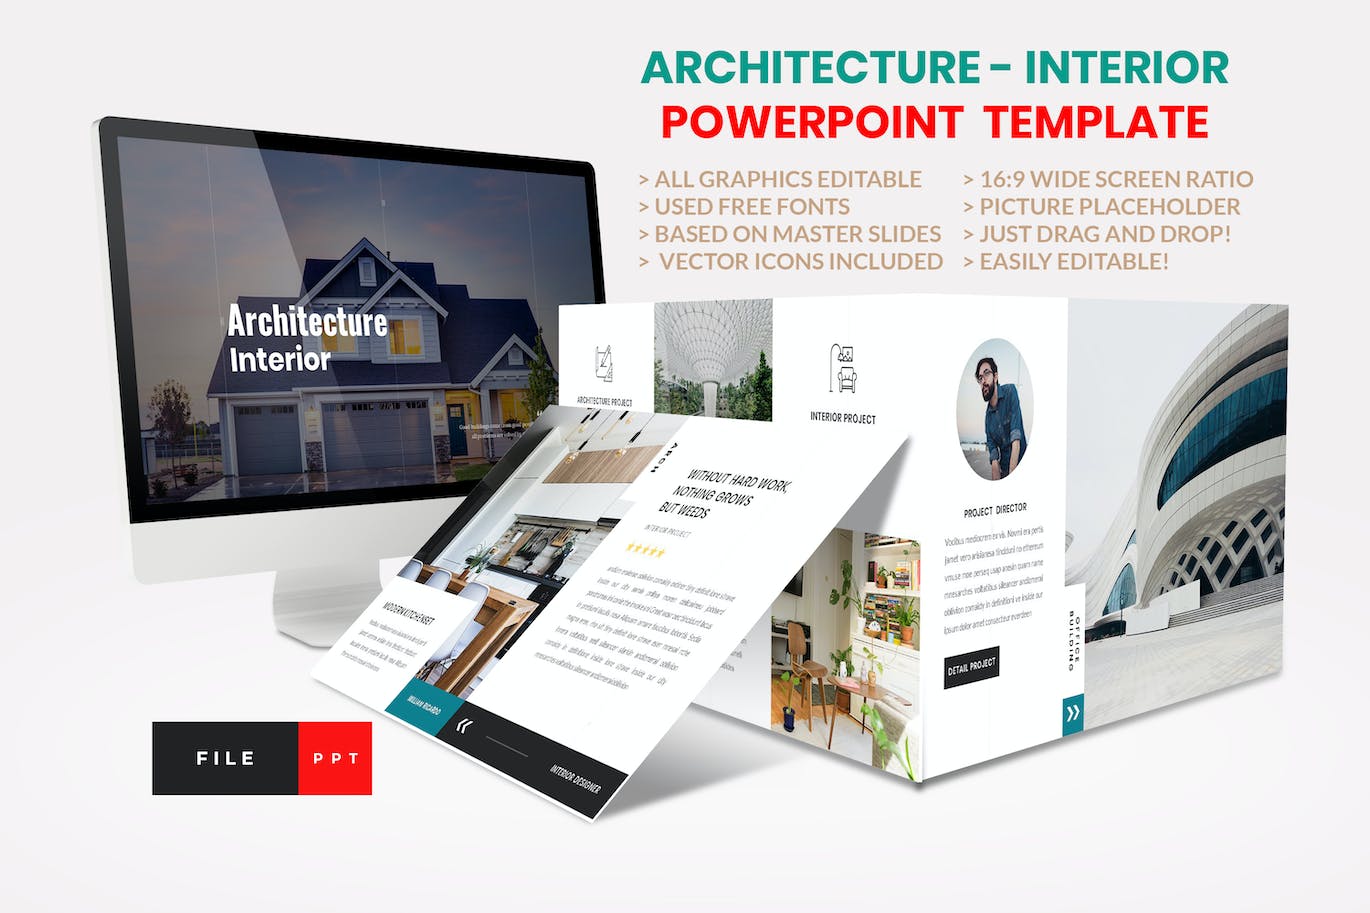 建筑室内设计演示PPT模板 Architecture – Interior PowerPoint Template 幻灯图表 第1张